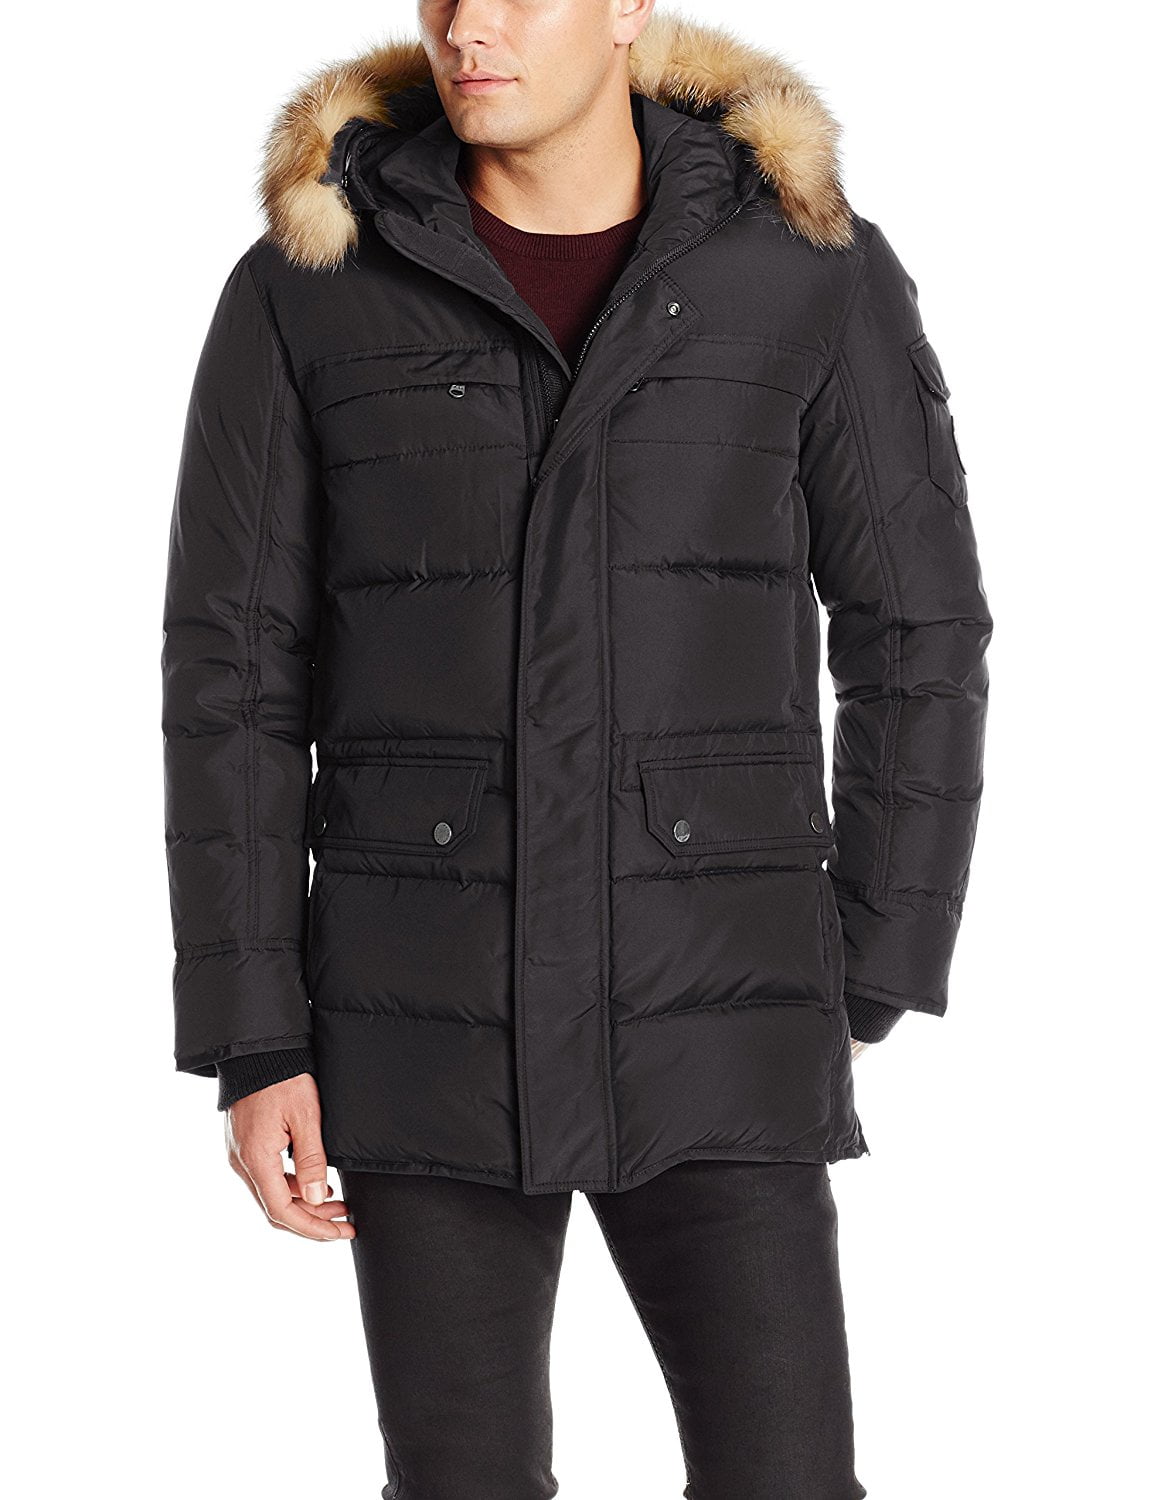 Pajar Talon Coat in Black | Walmart Canada